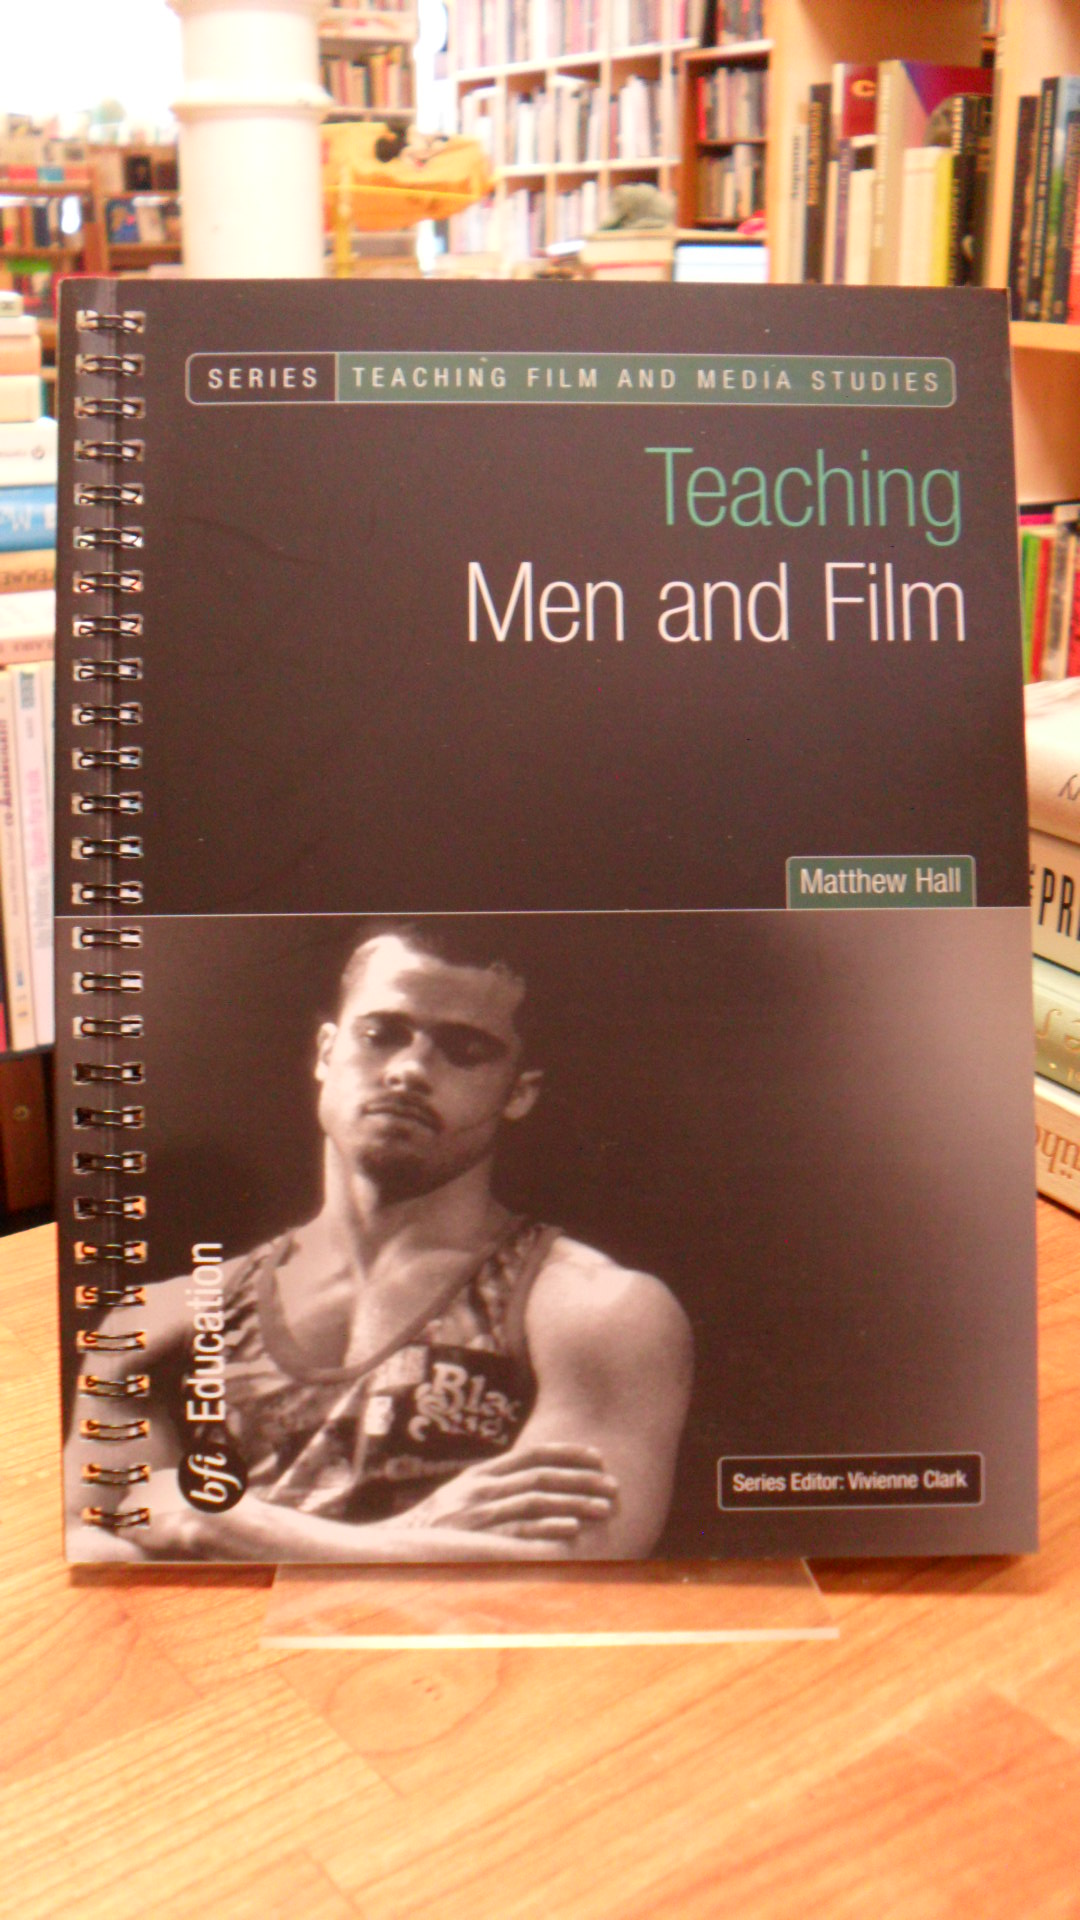 Teaching men and film,